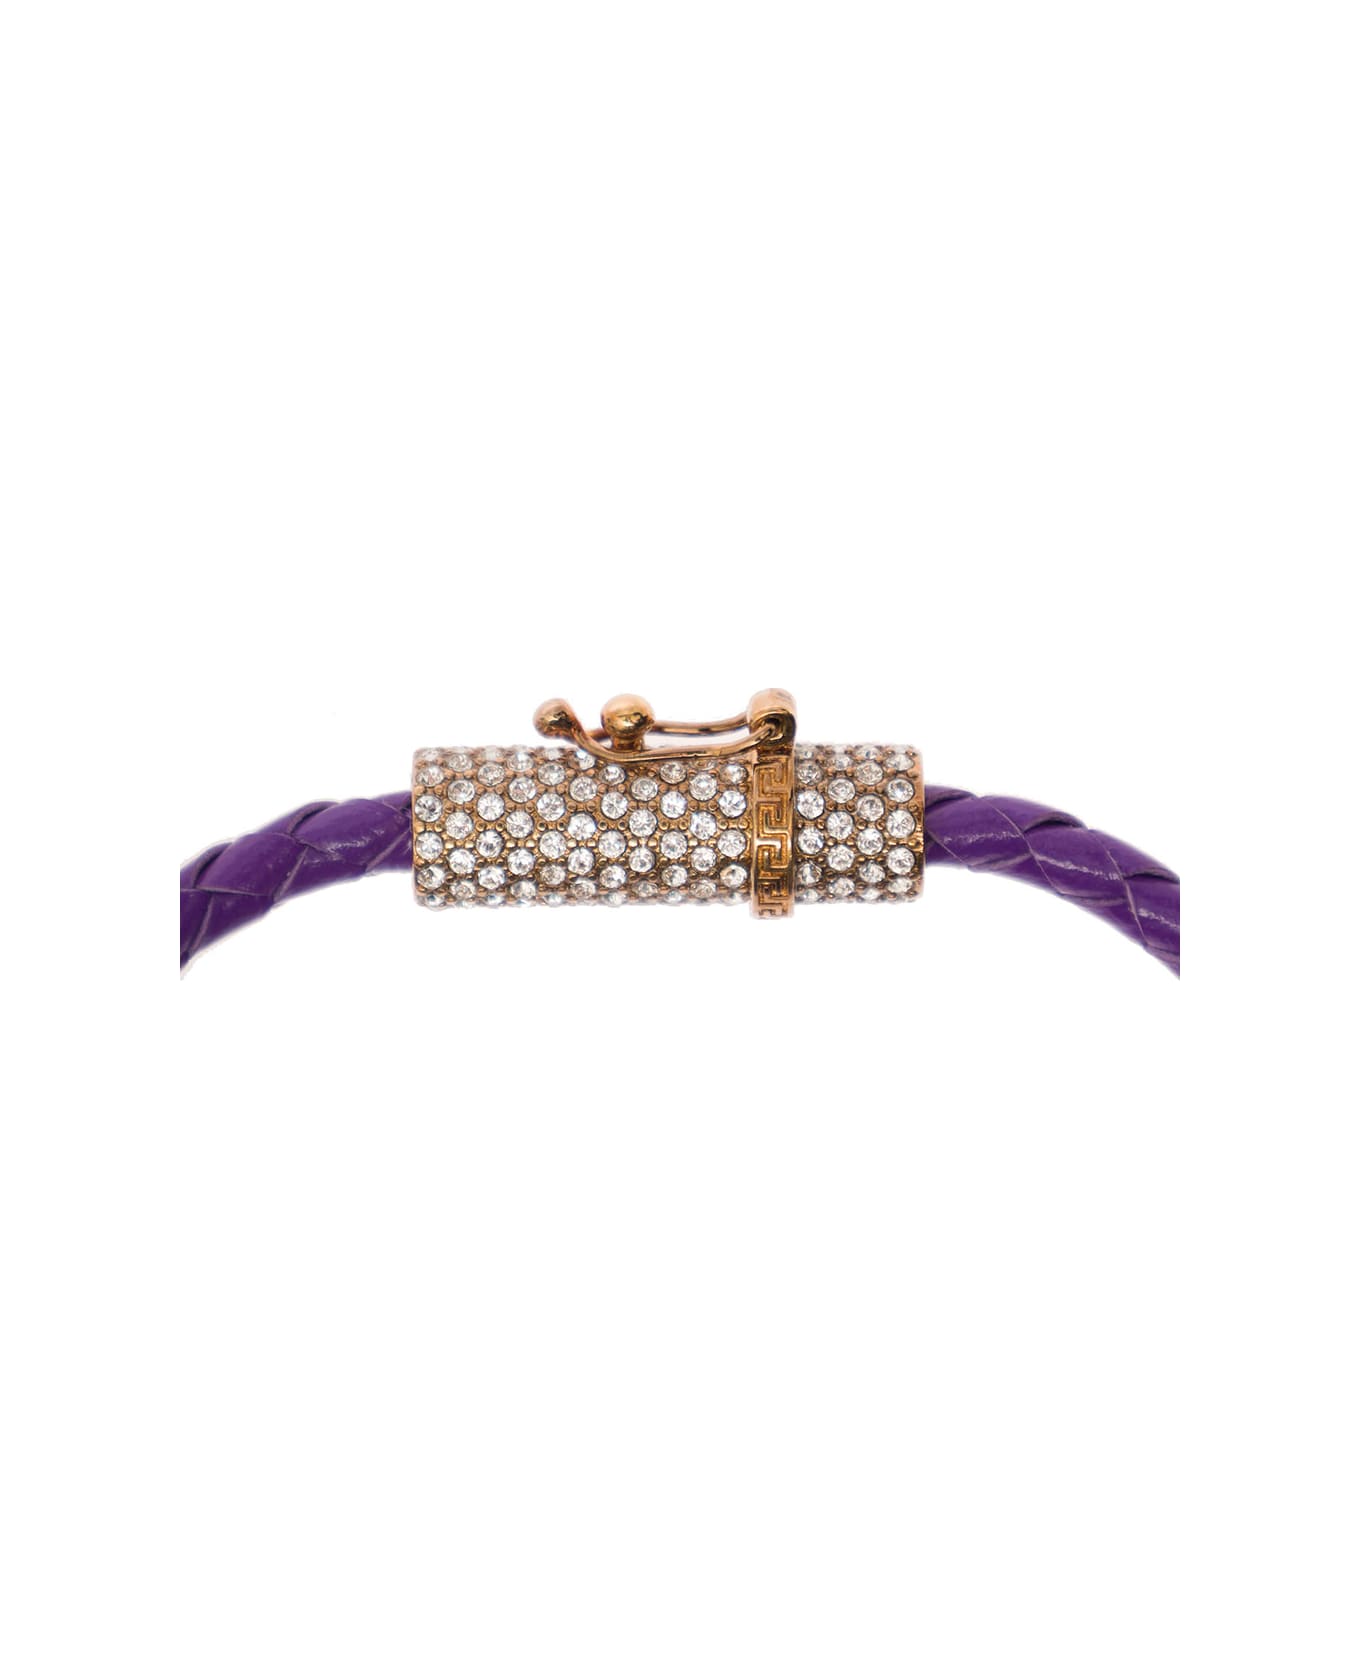 Versace Medusa Plaque Detail Bracelt In Gold-tone Brass And Purple Leather Woman - Violet